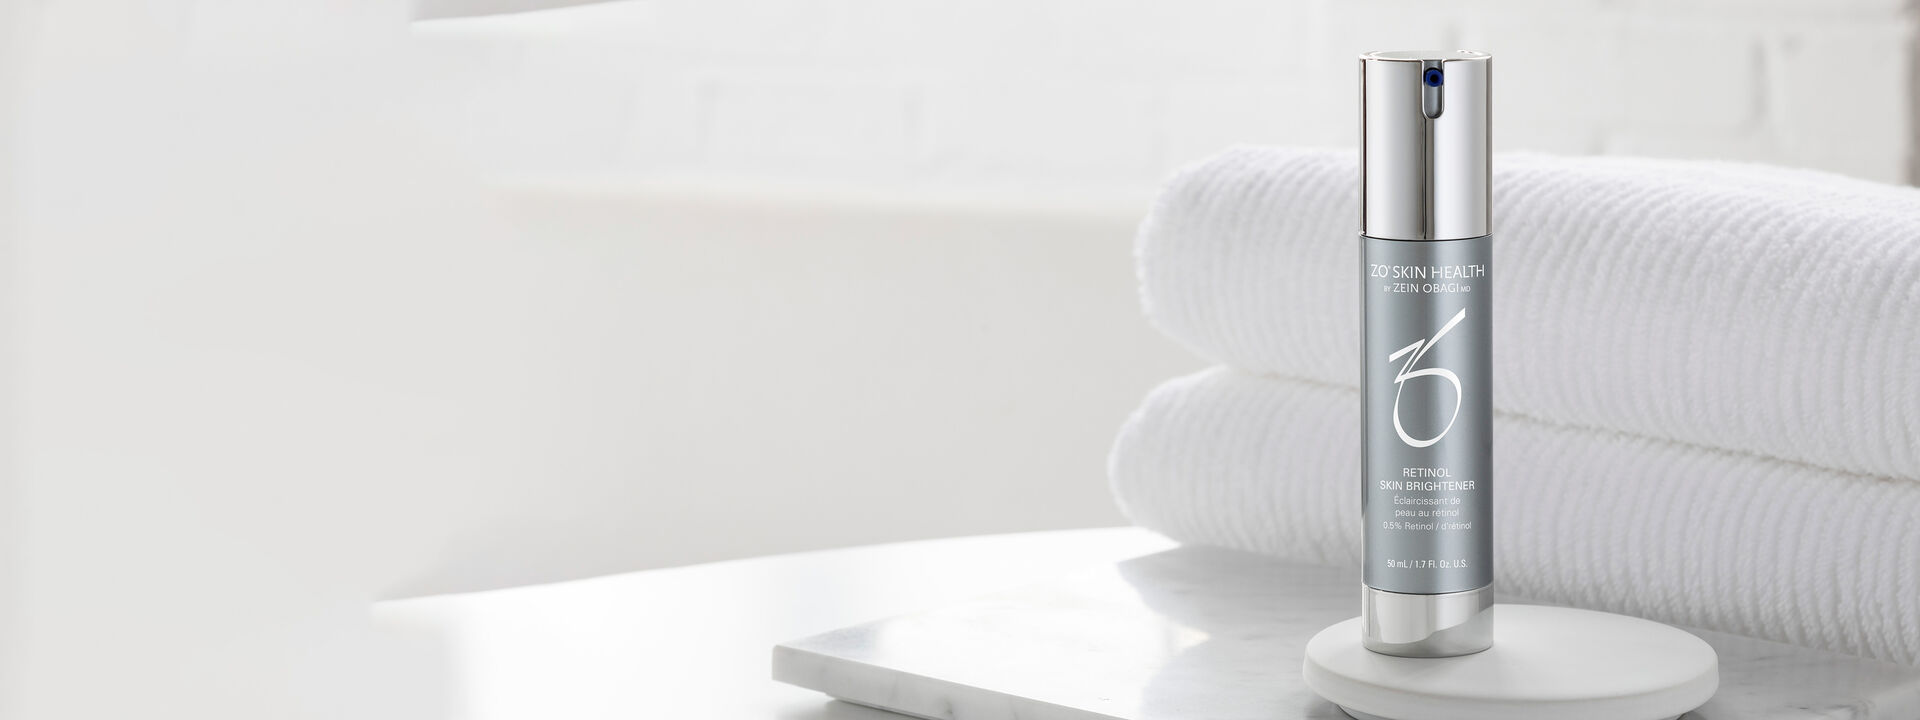 Retinol Skin Brightener in front of folded towels